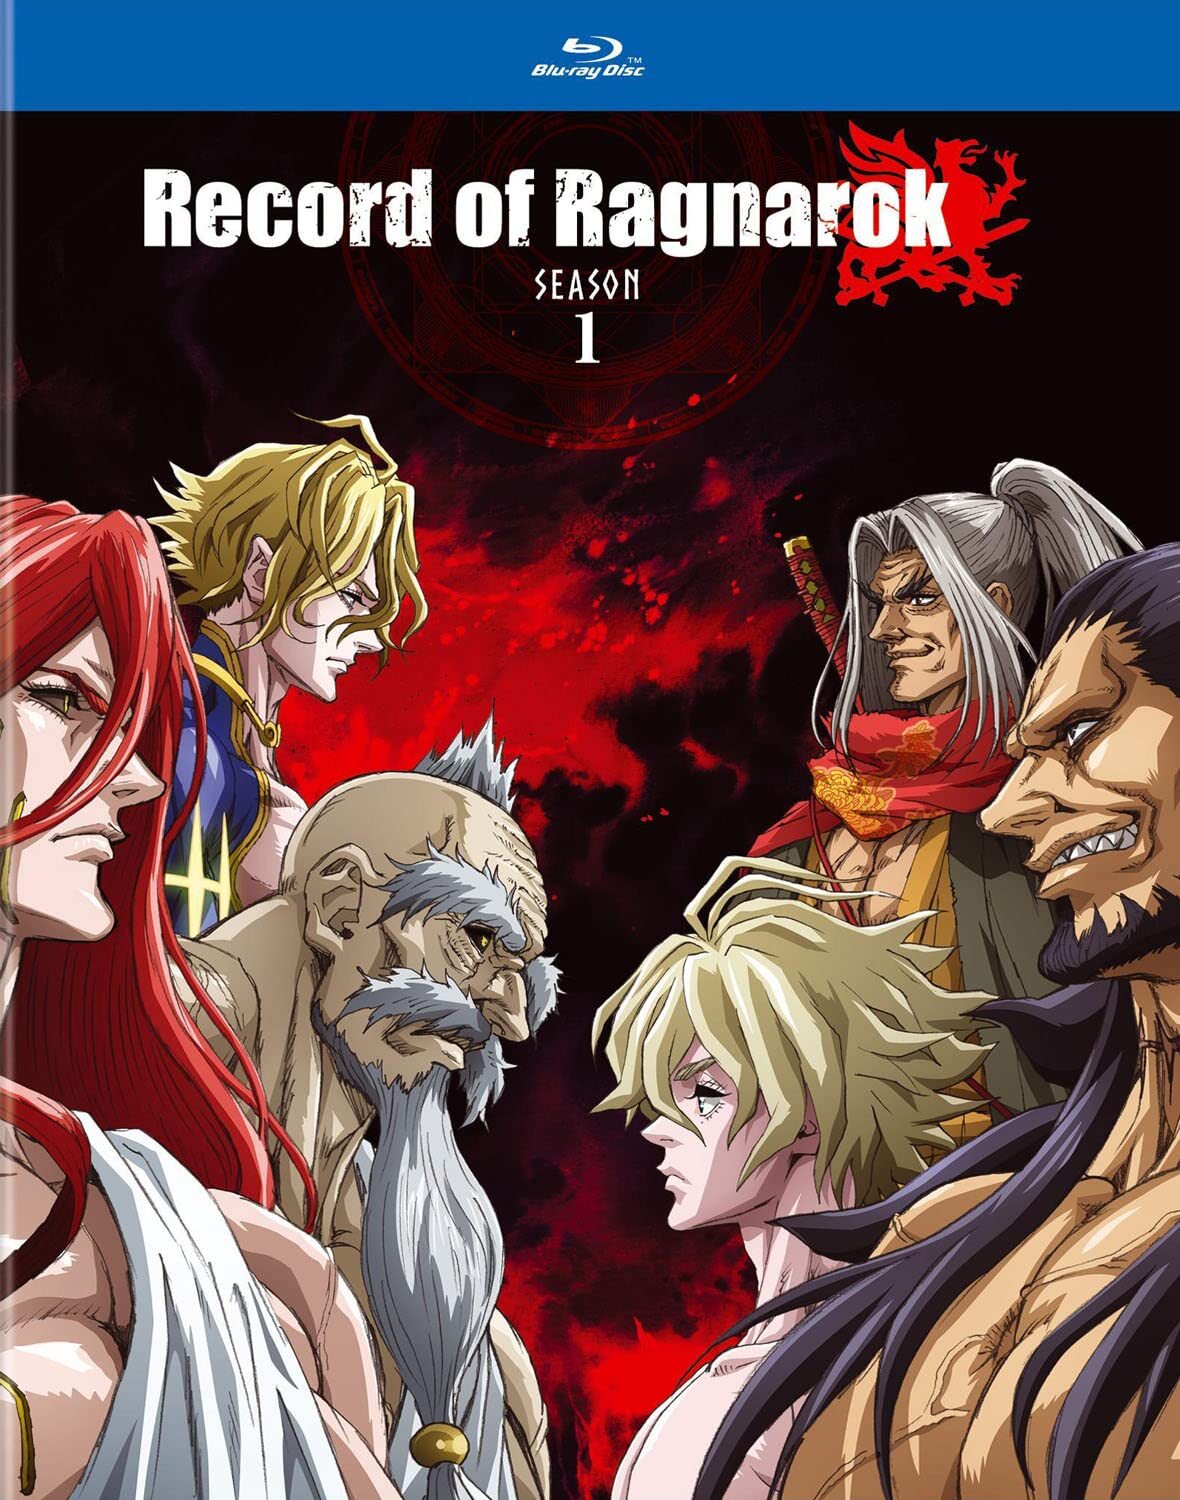 ragnarok: Record of Ragnarok Season 2 finale episodes to premiere on  Japanese TV. See when - The Economic Times